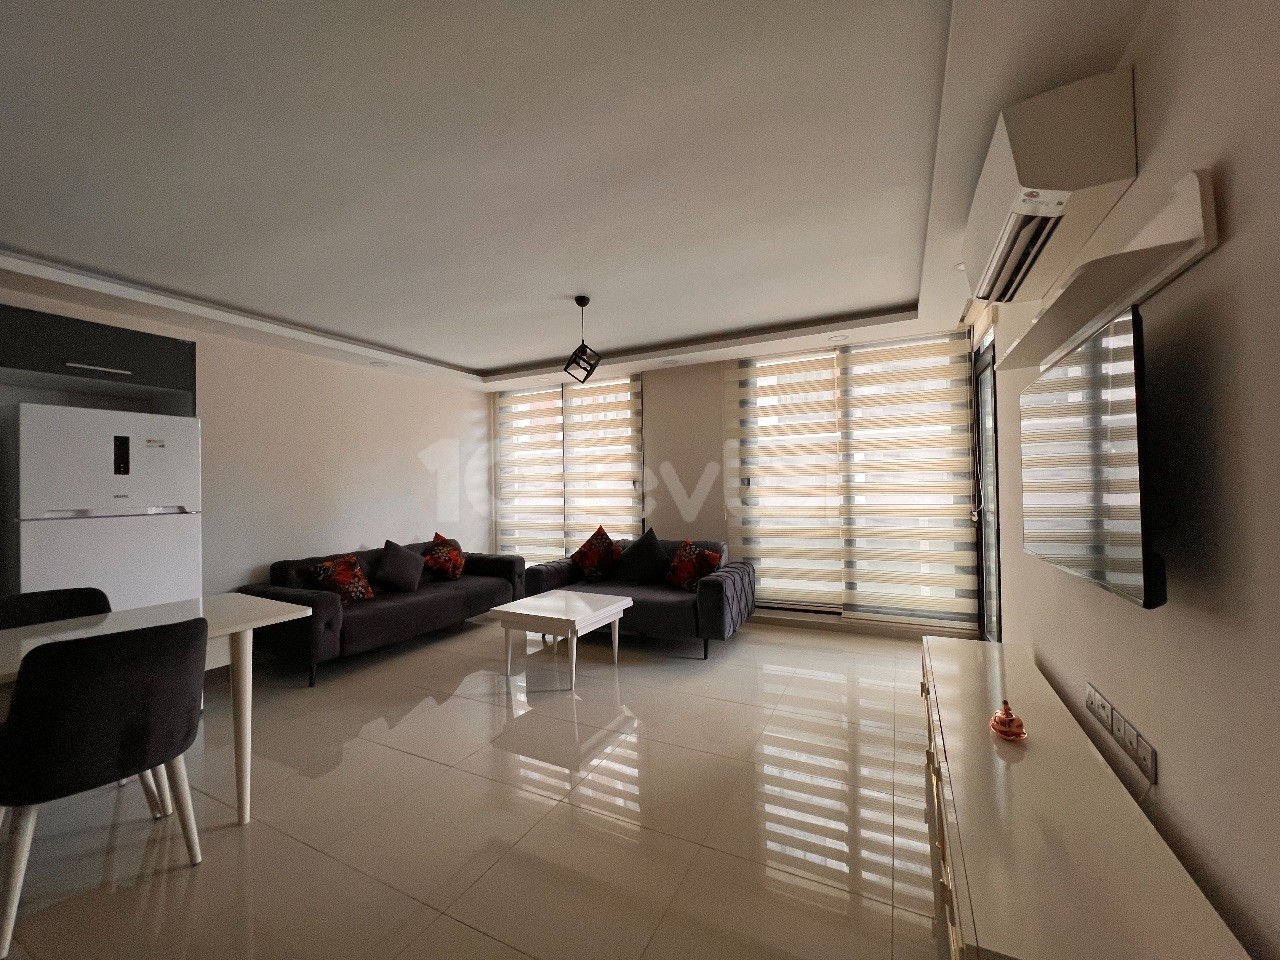 2 Bedroom Flat for Rent in Girne Center 